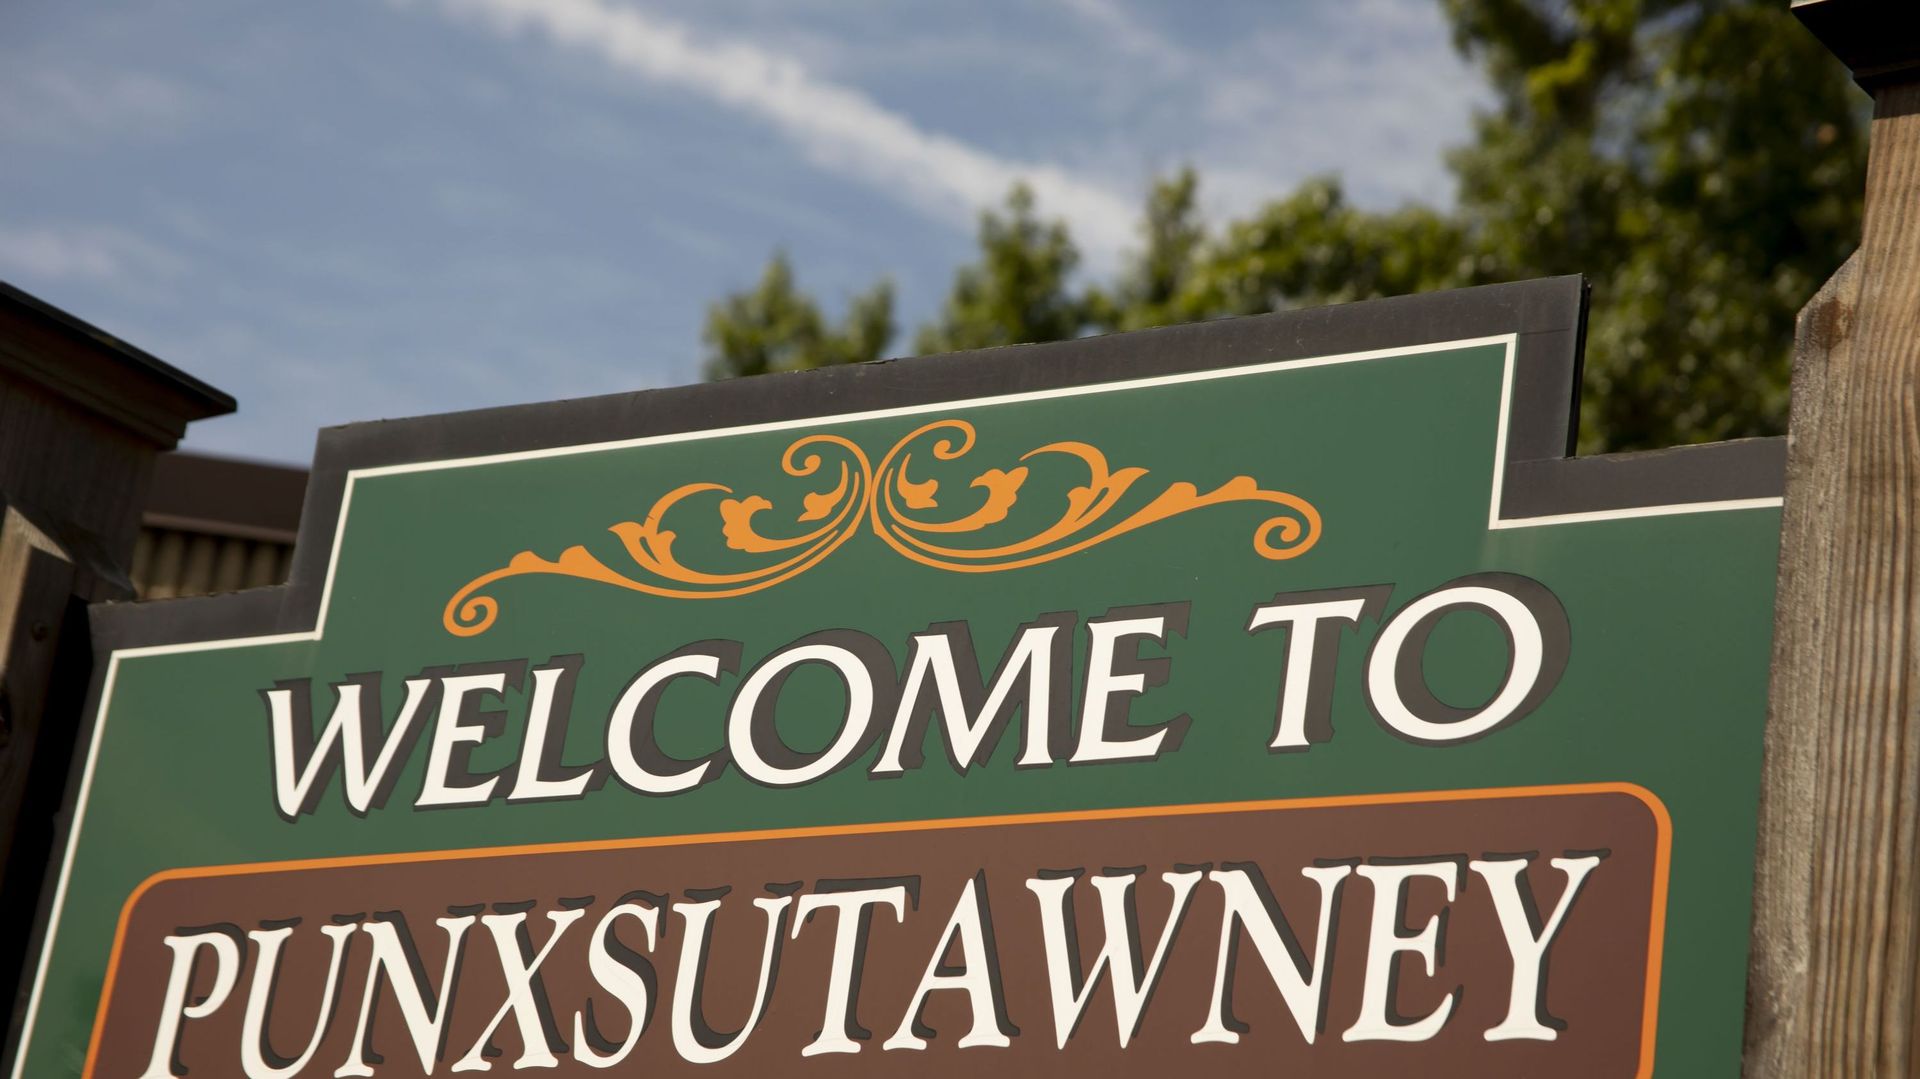 Welcome to Punxsutawney sign